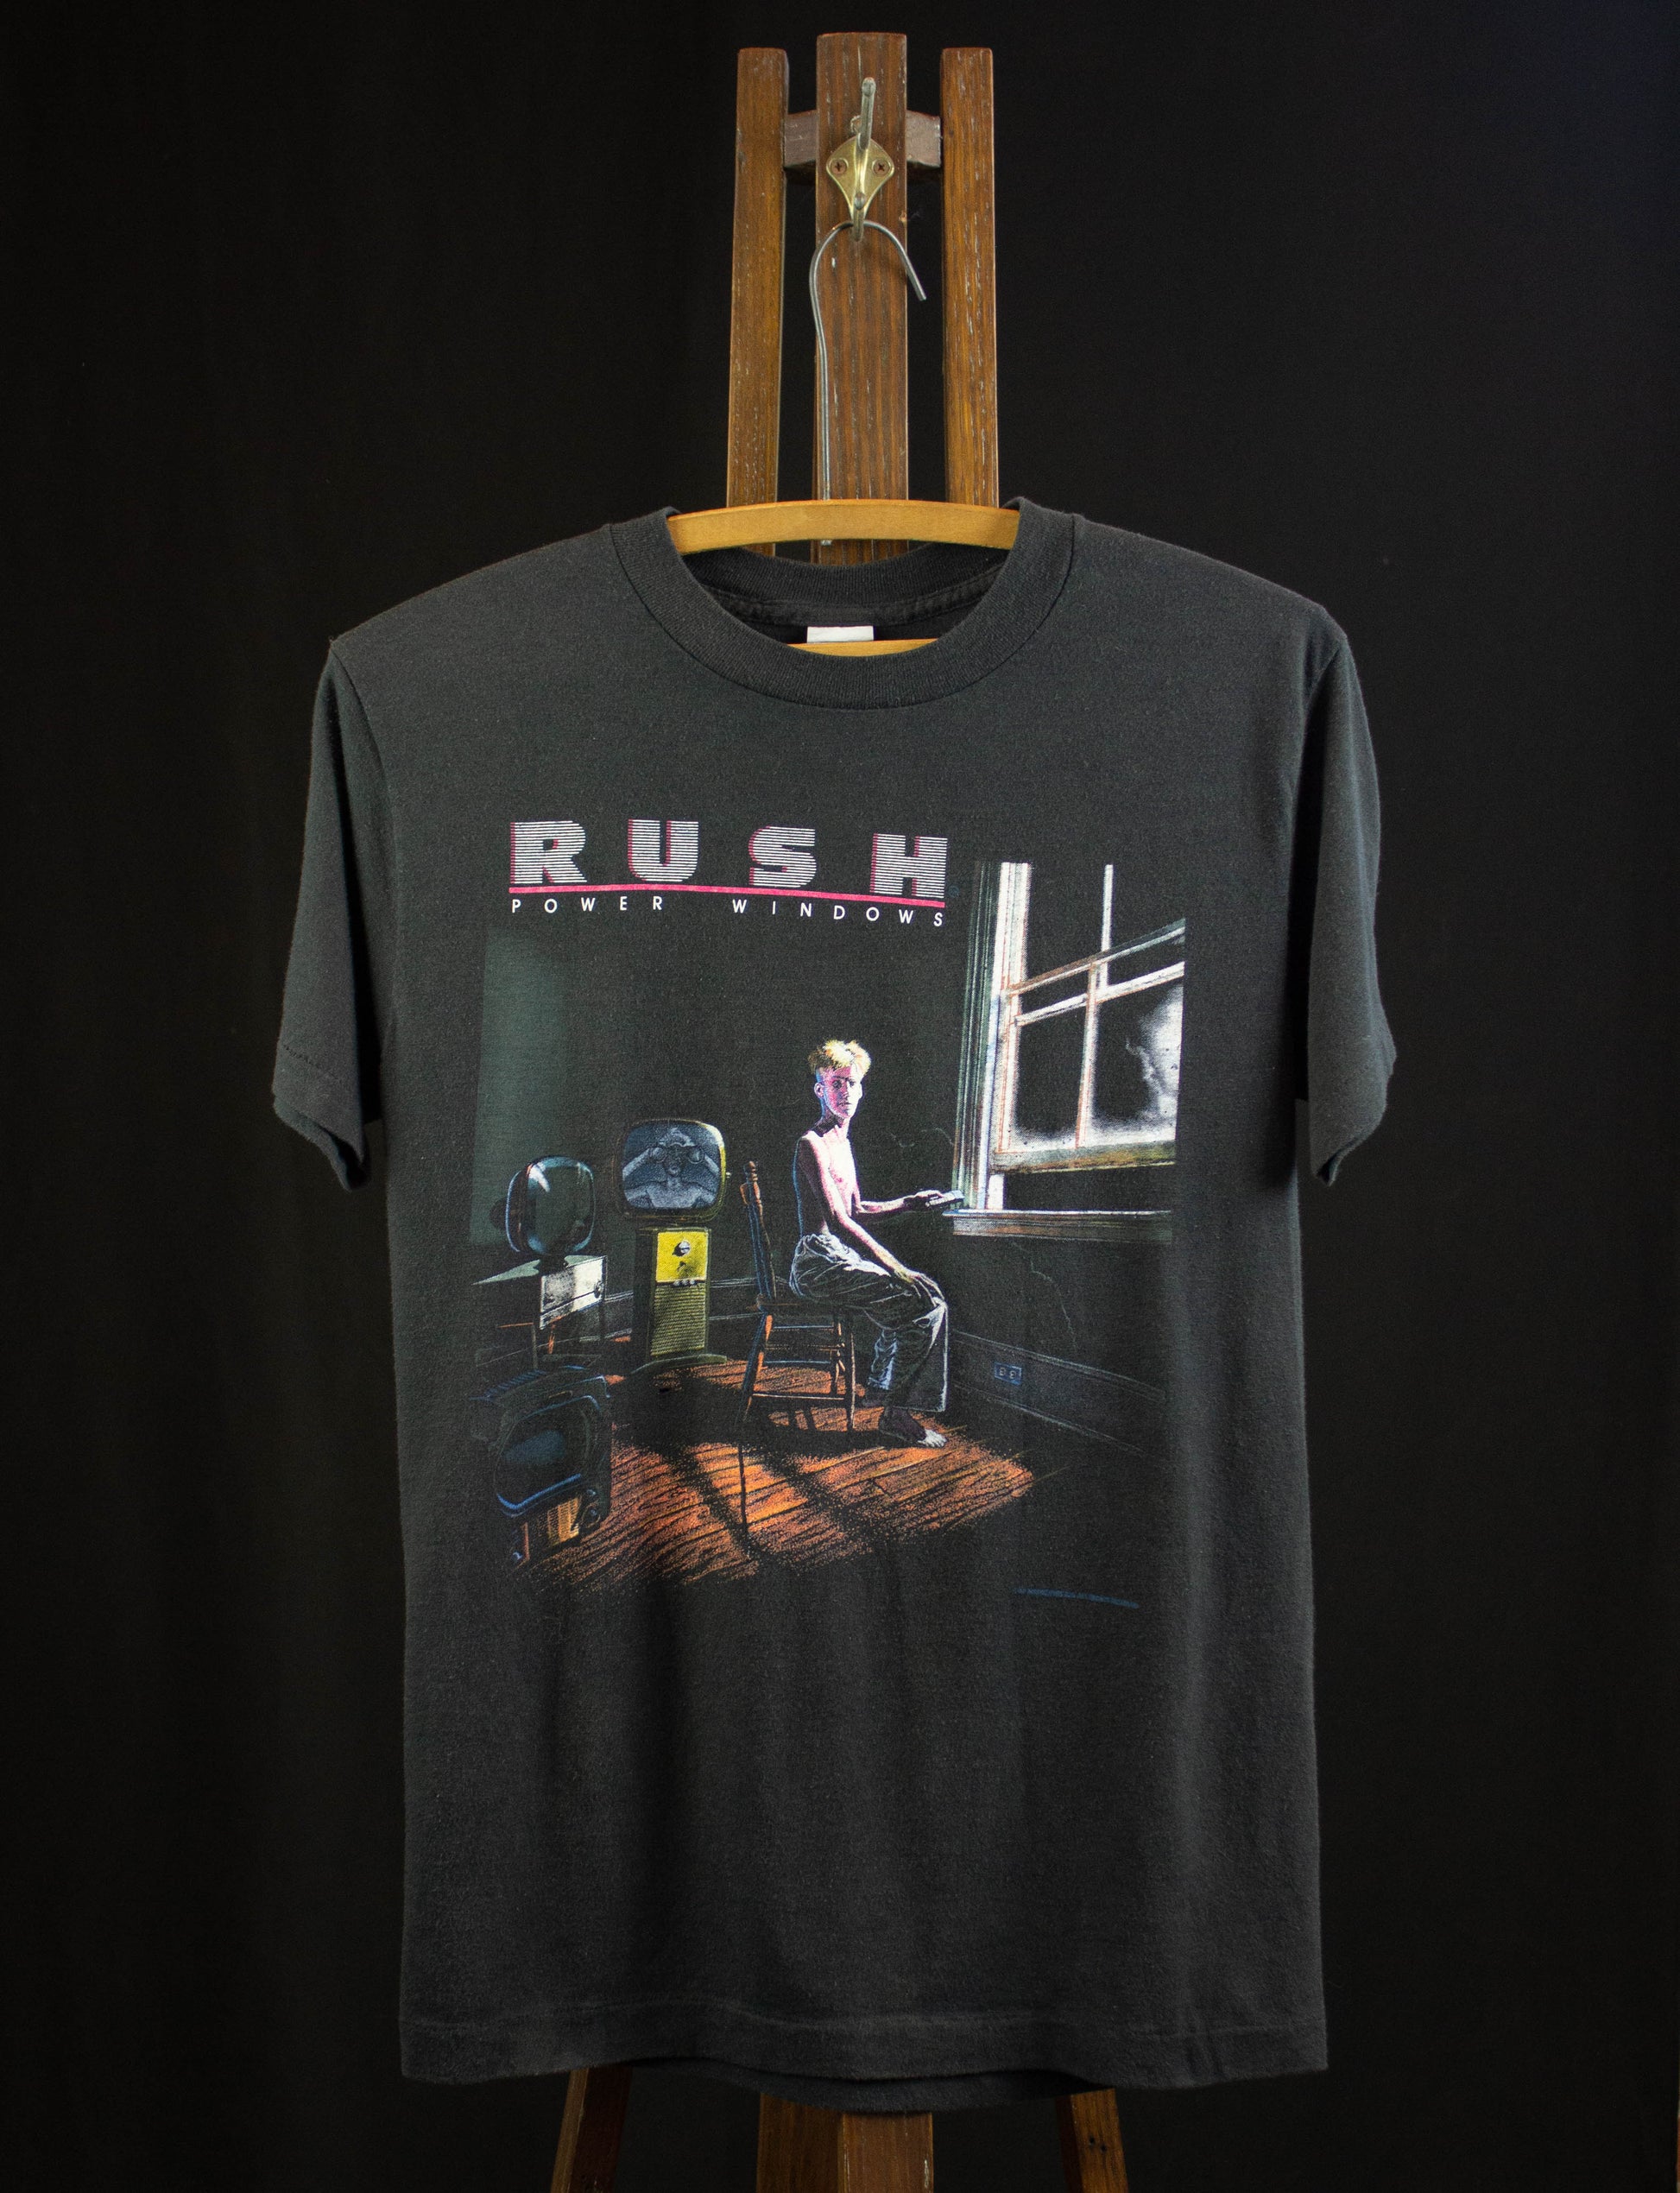 Vintage Rush Concert T Shirt 1985 Power Windows Tour Black Small